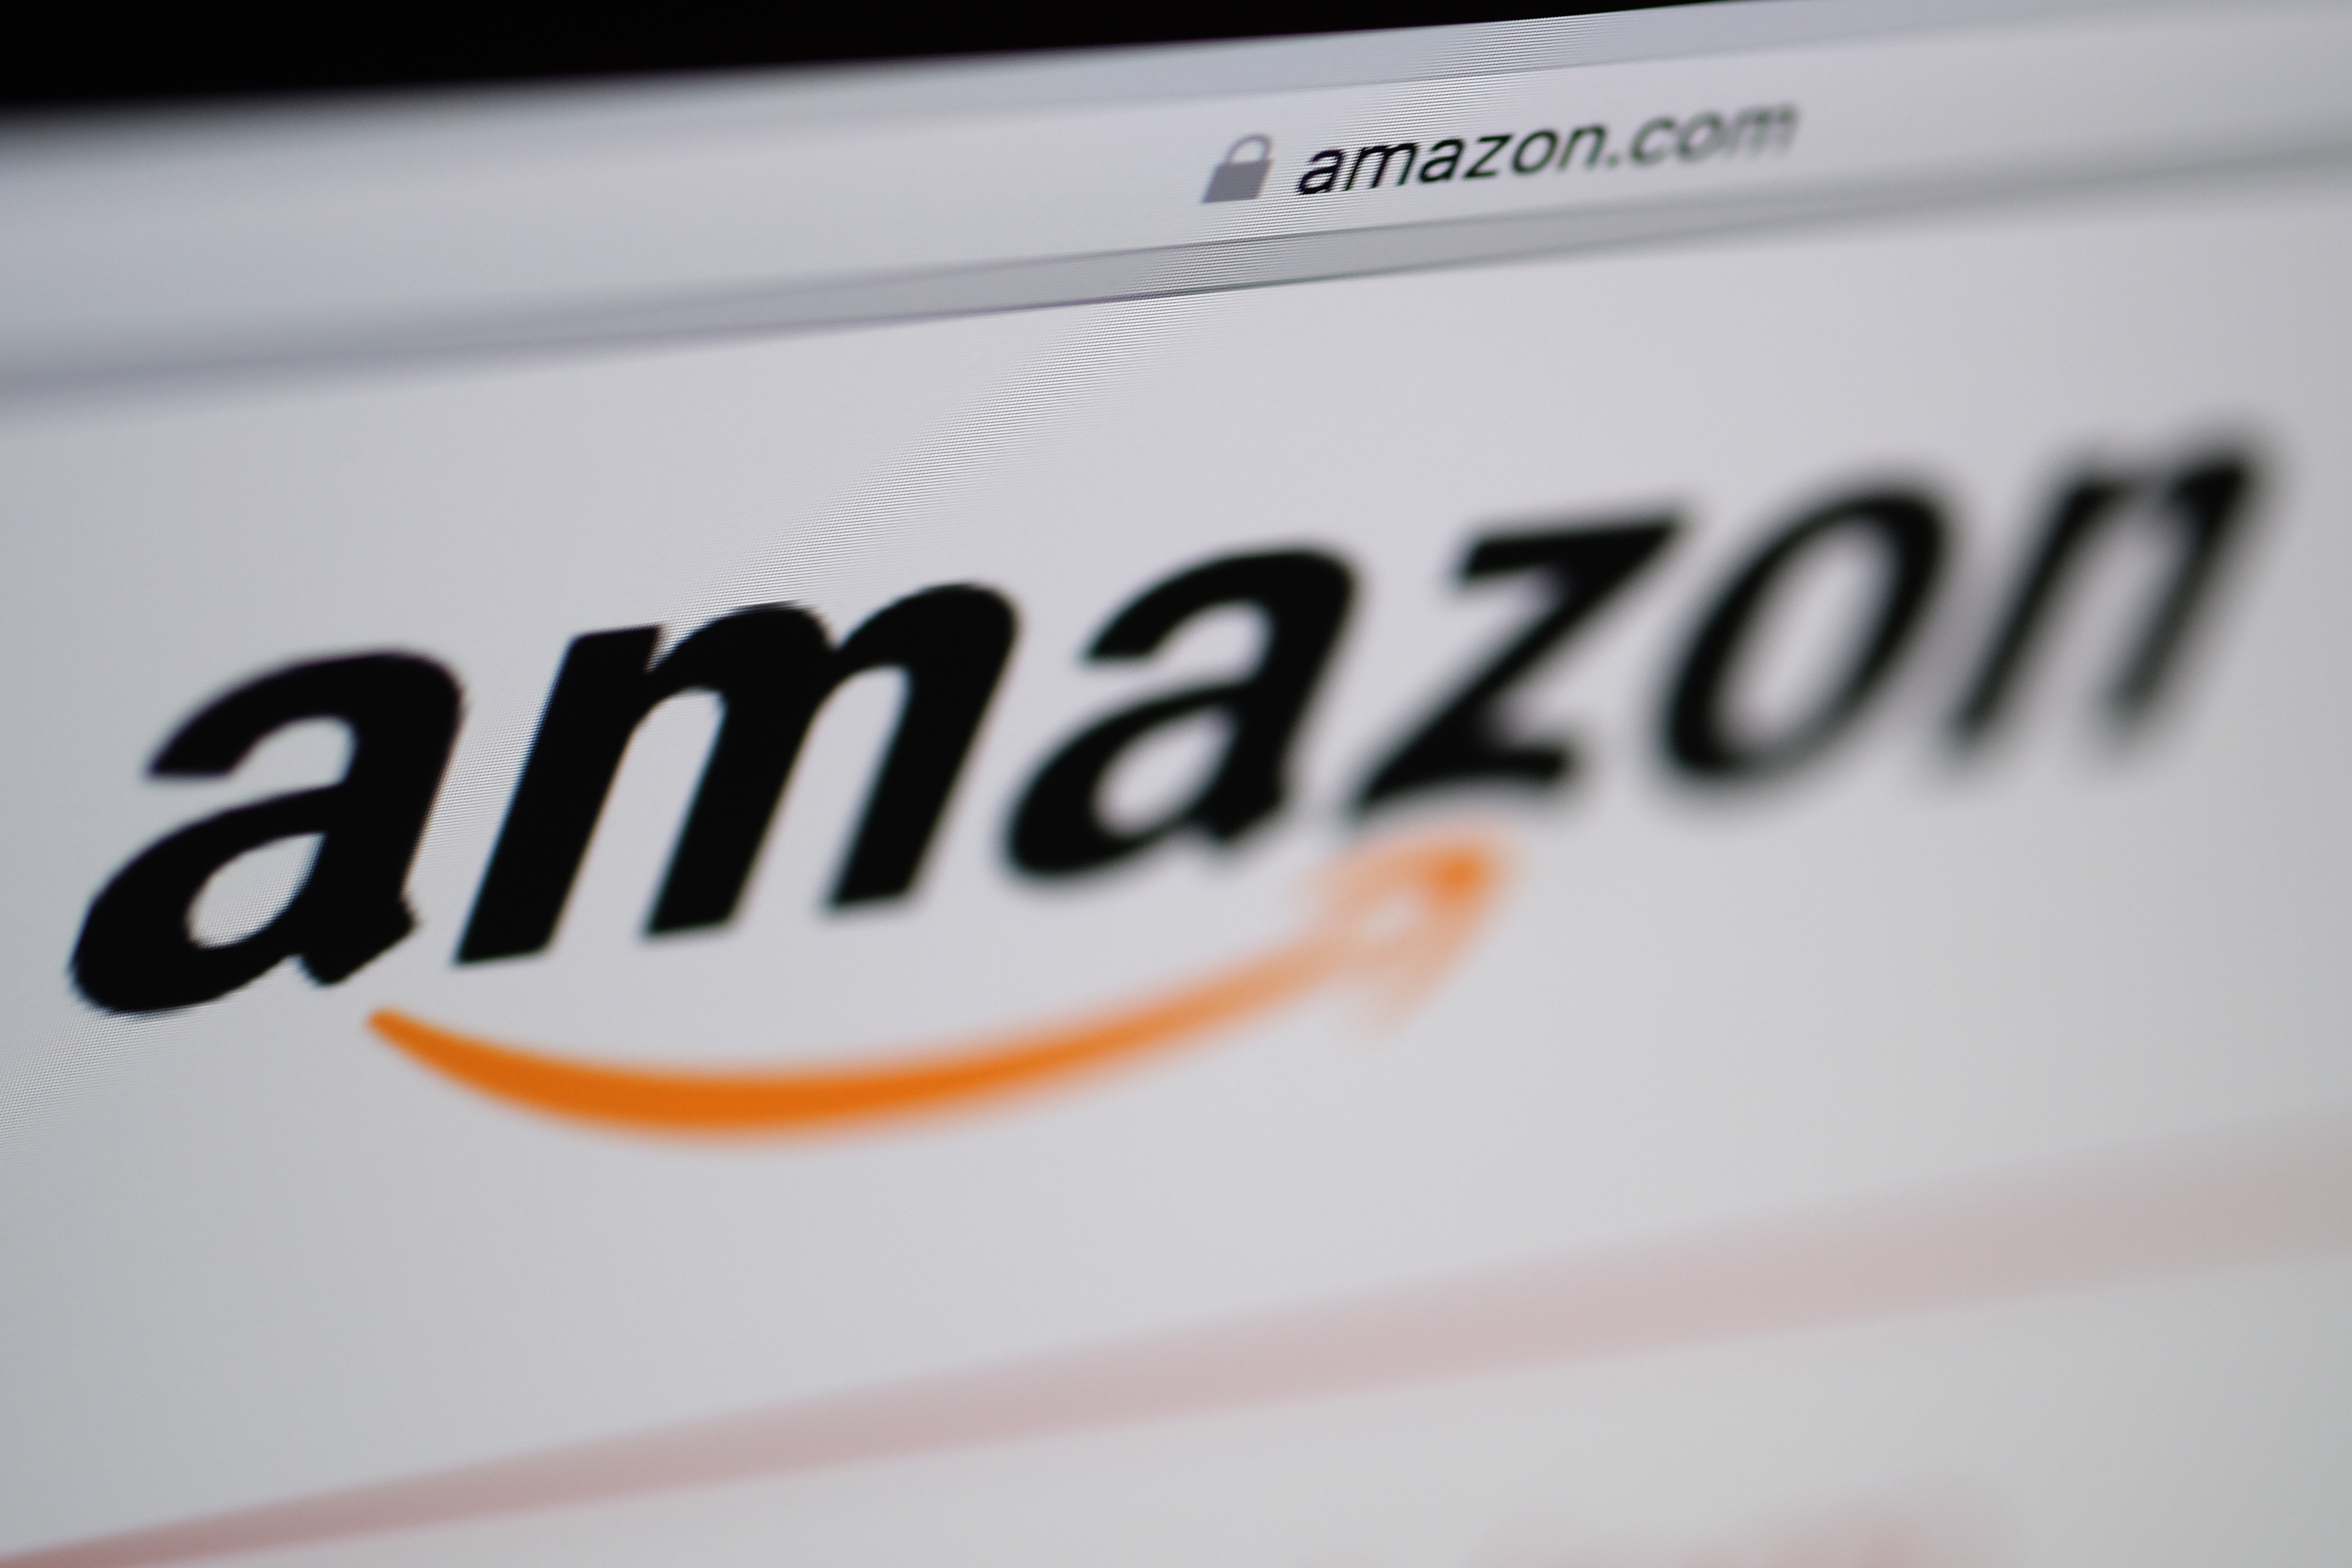 Amazon Sues 10,000 Facebook Group Administrators Over Fake Reviews
Scheme